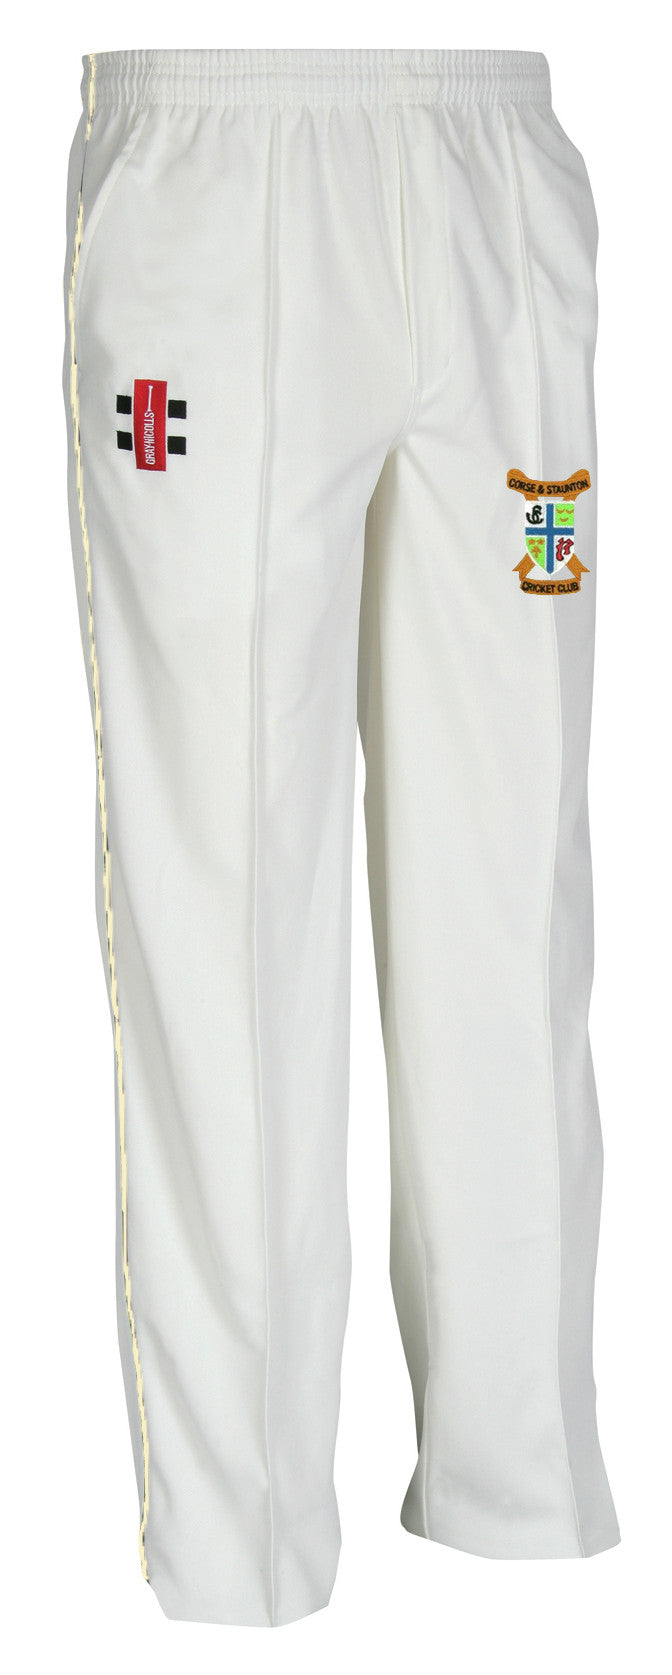 Corse & Staunton CC Junior Matrix Cricket Trouser